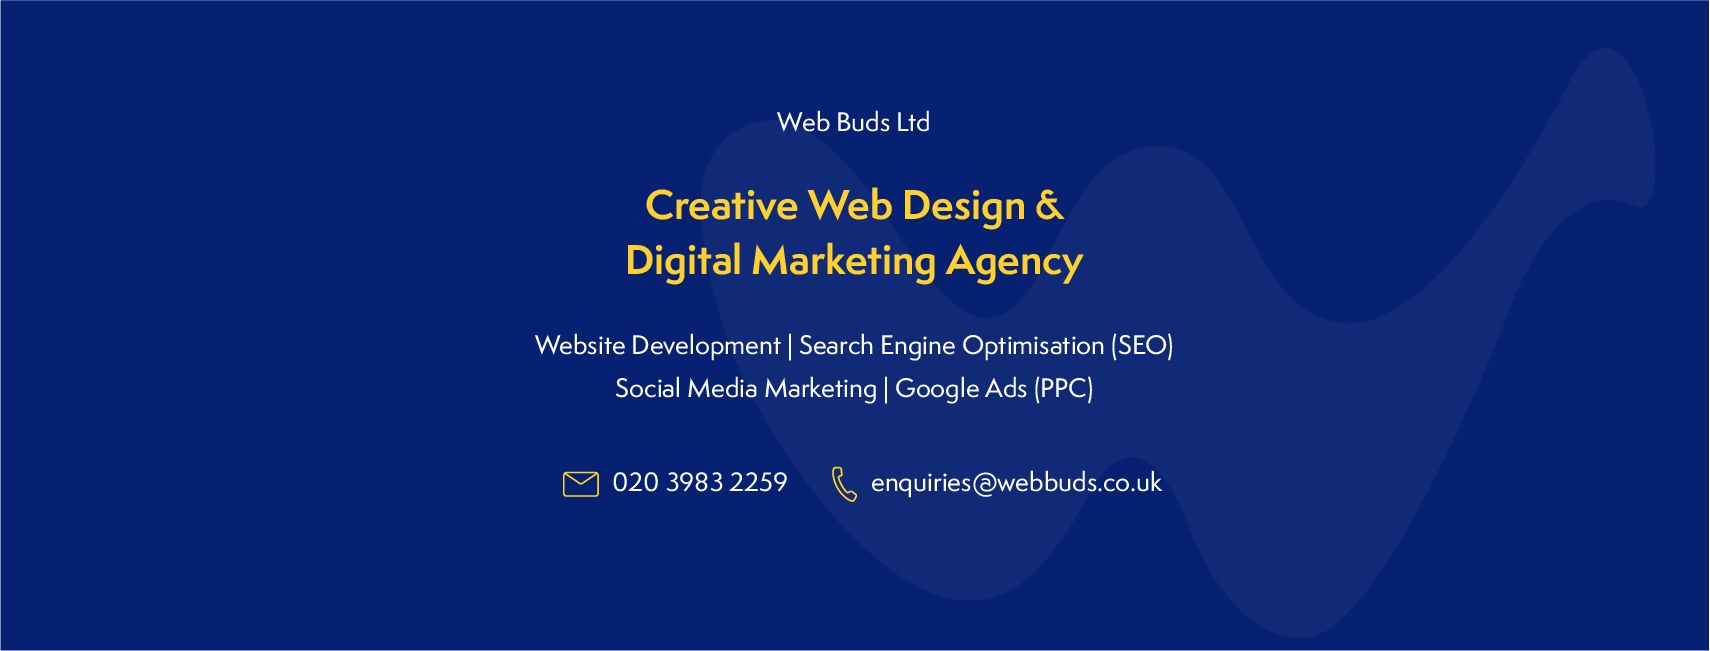 Web Buds Ltd